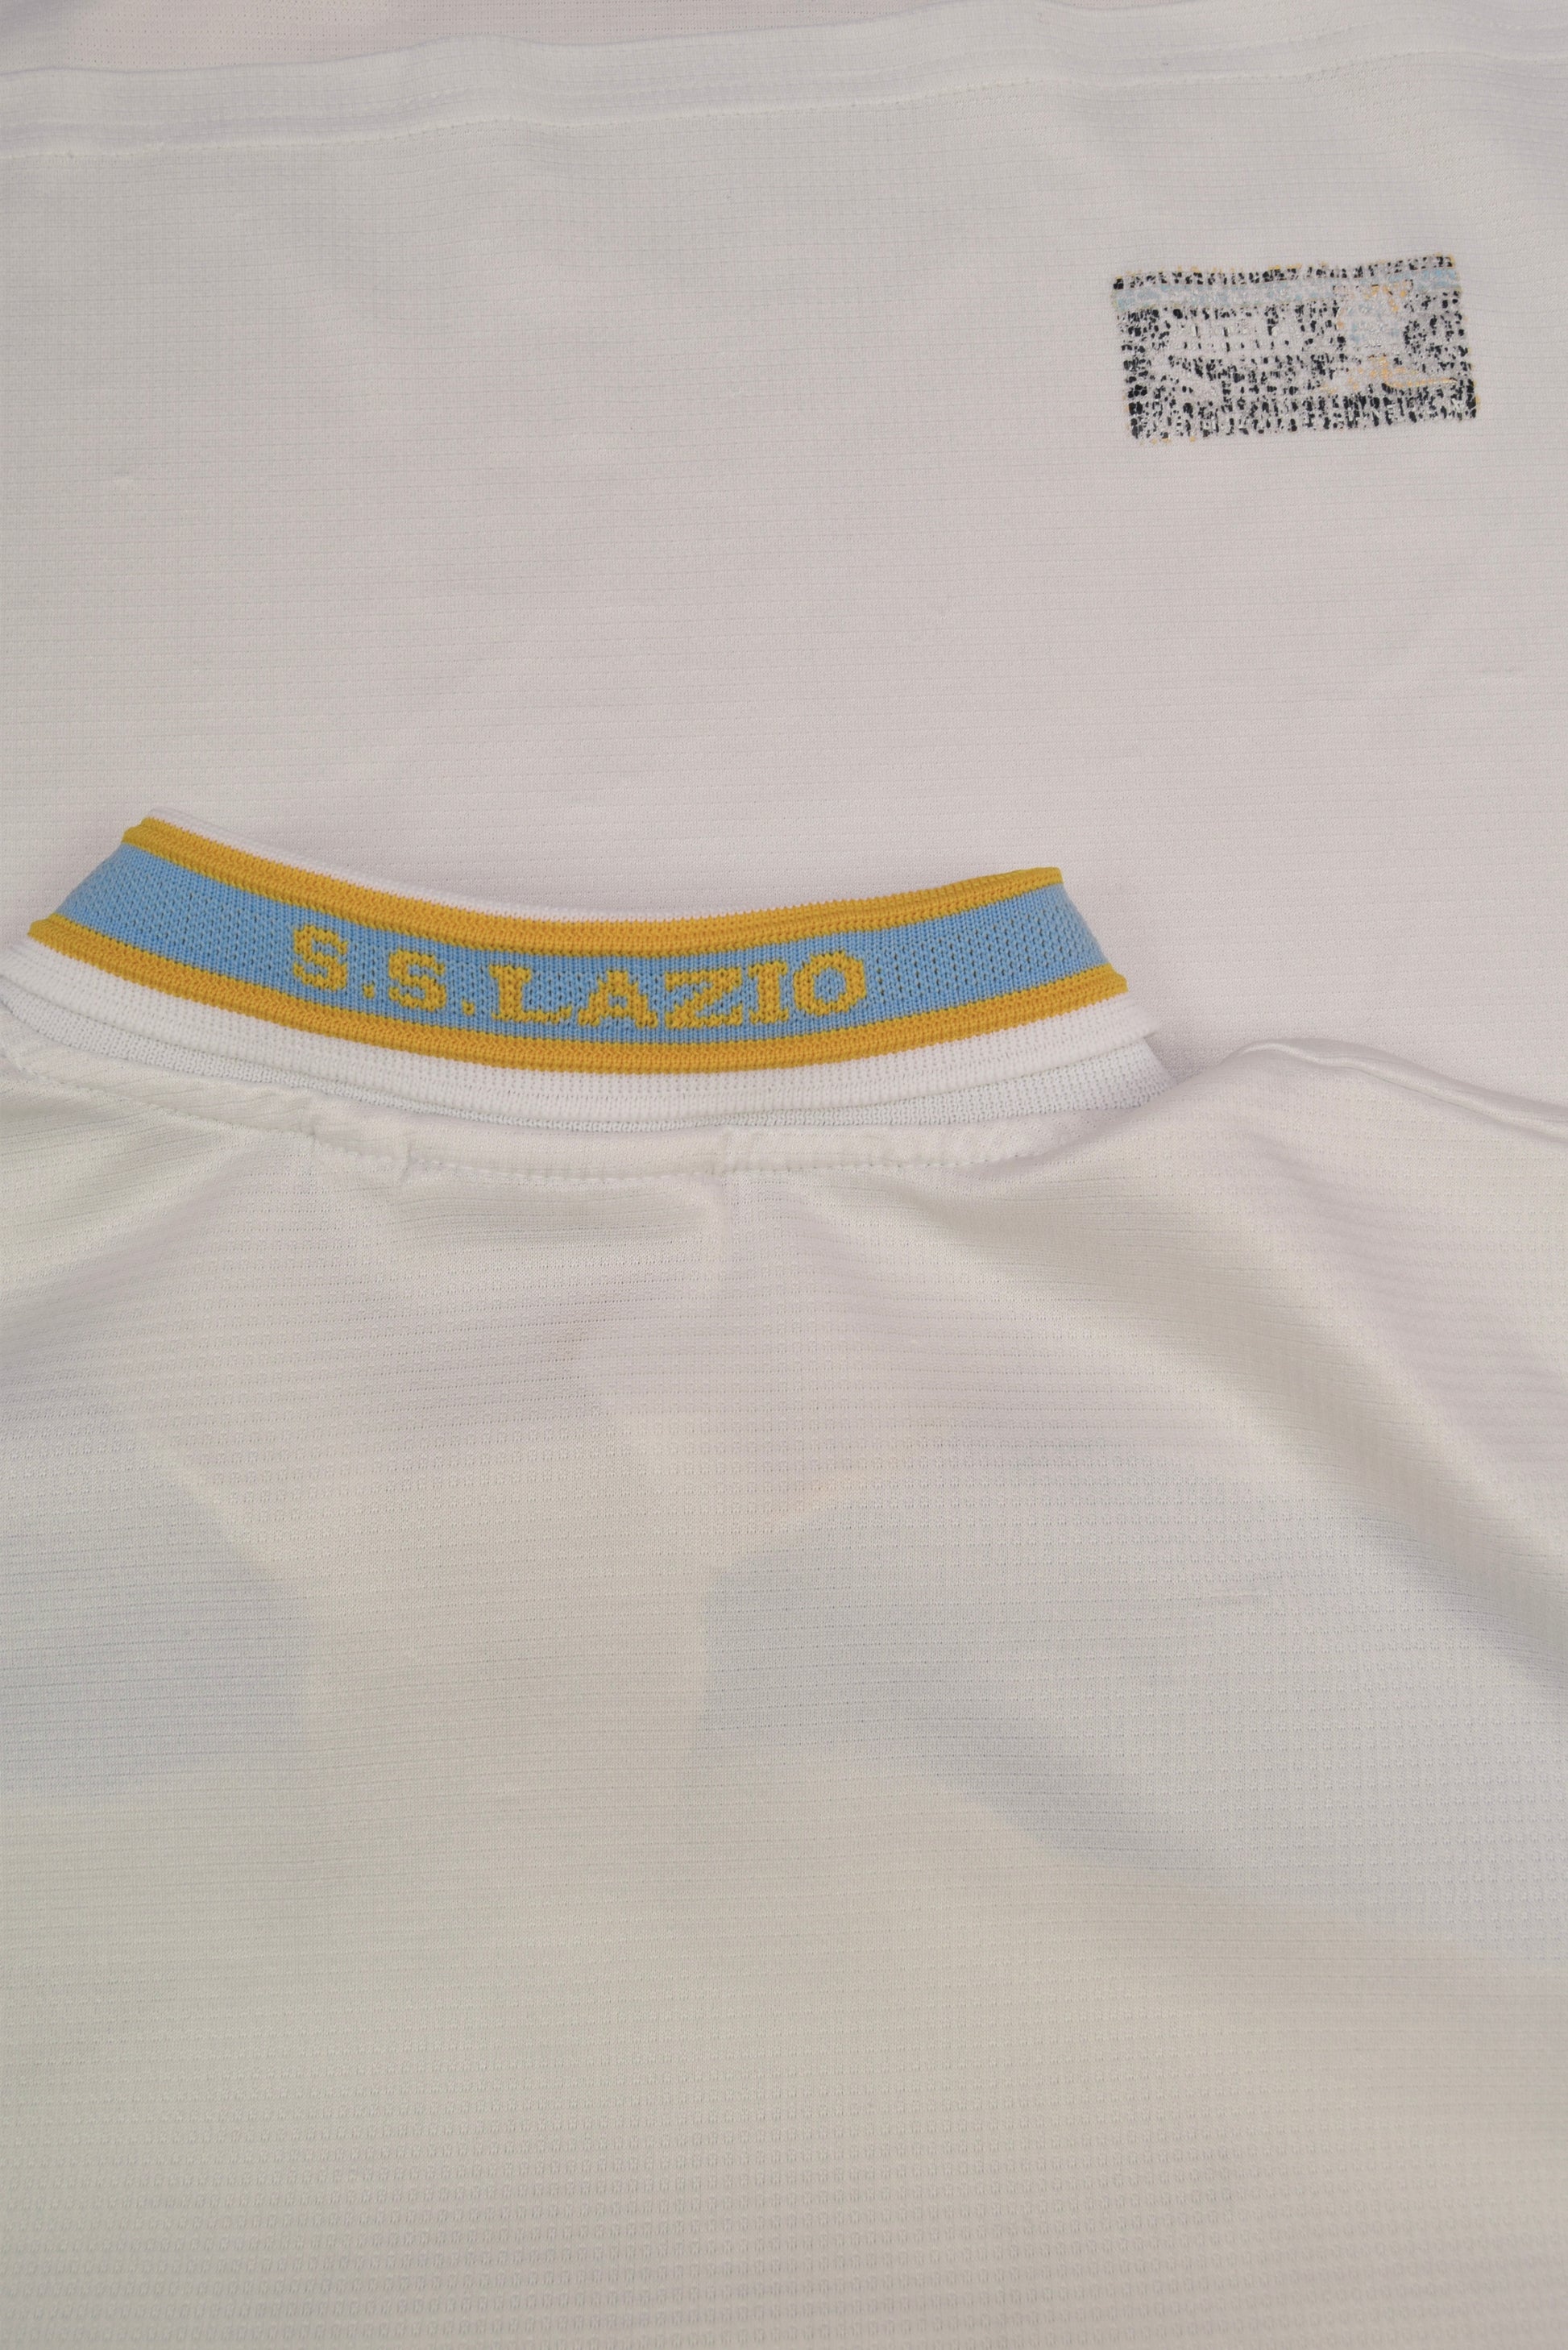 SS Lazio Roma Puma 1999-2000 Away Football Shirt White 1900-2000 Anniversary Centenary Cirio Size L